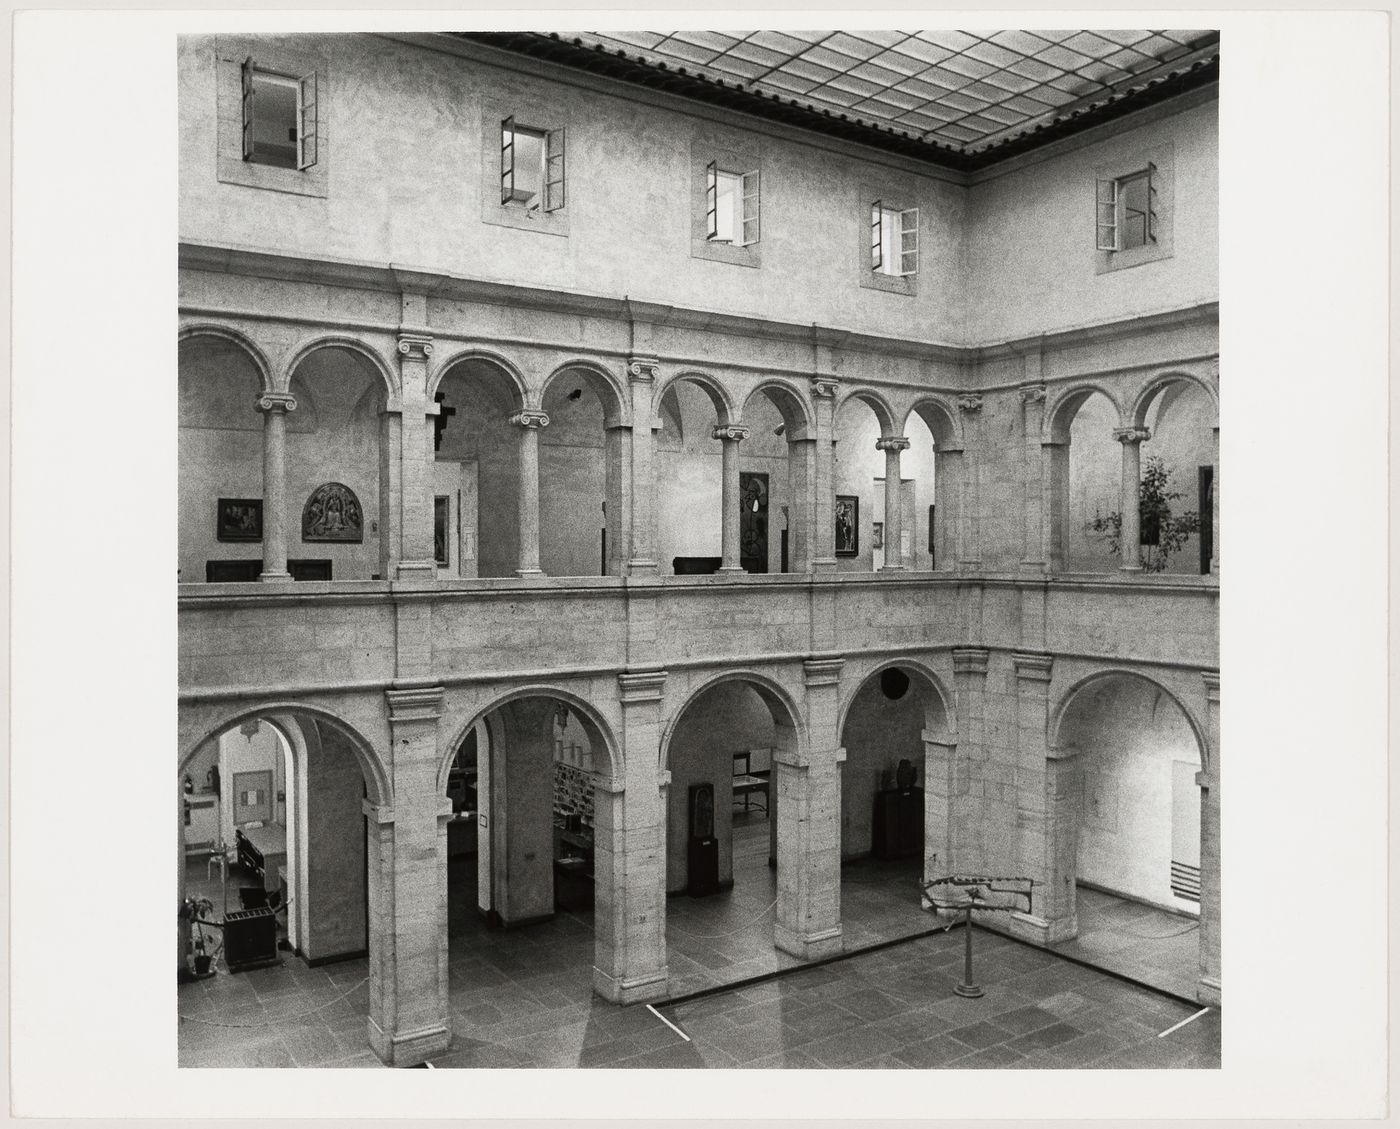 Fogg Museum of Art, Harvard University, Cambridge, Massachusetts: view of central courtyard